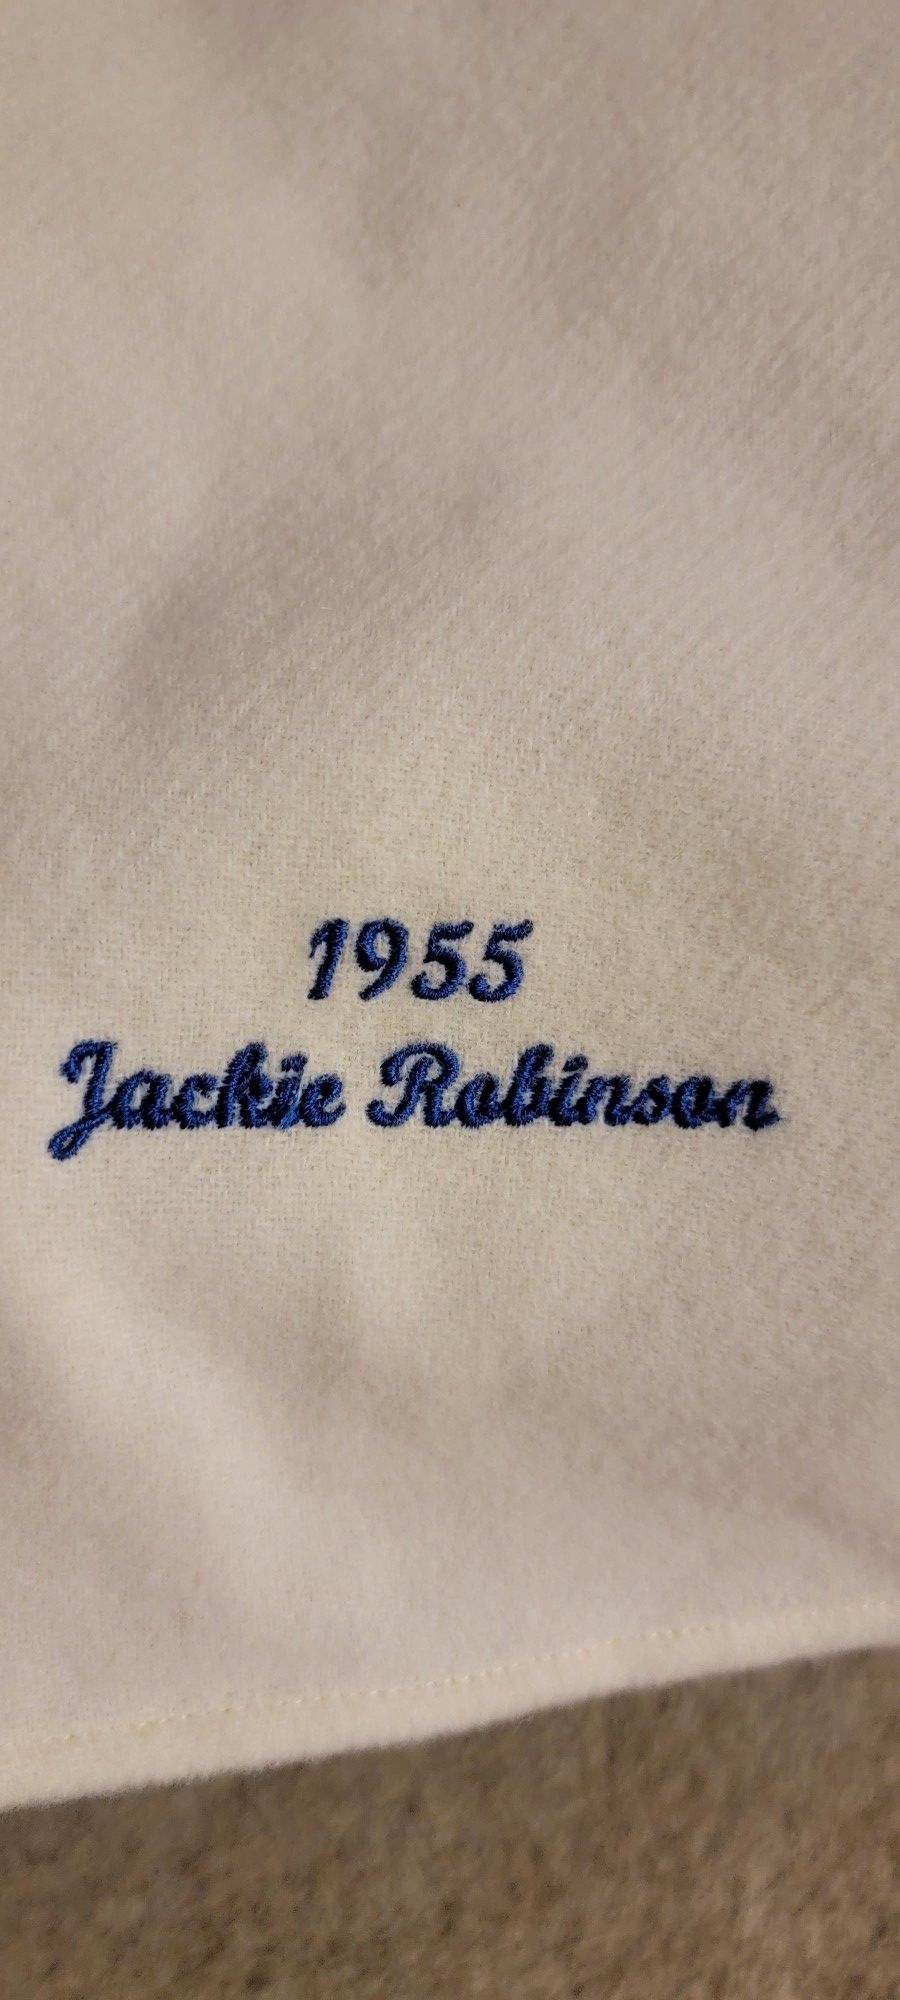 Jackie Robinson Jersey for Sale in Atlanta, GA - OfferUp